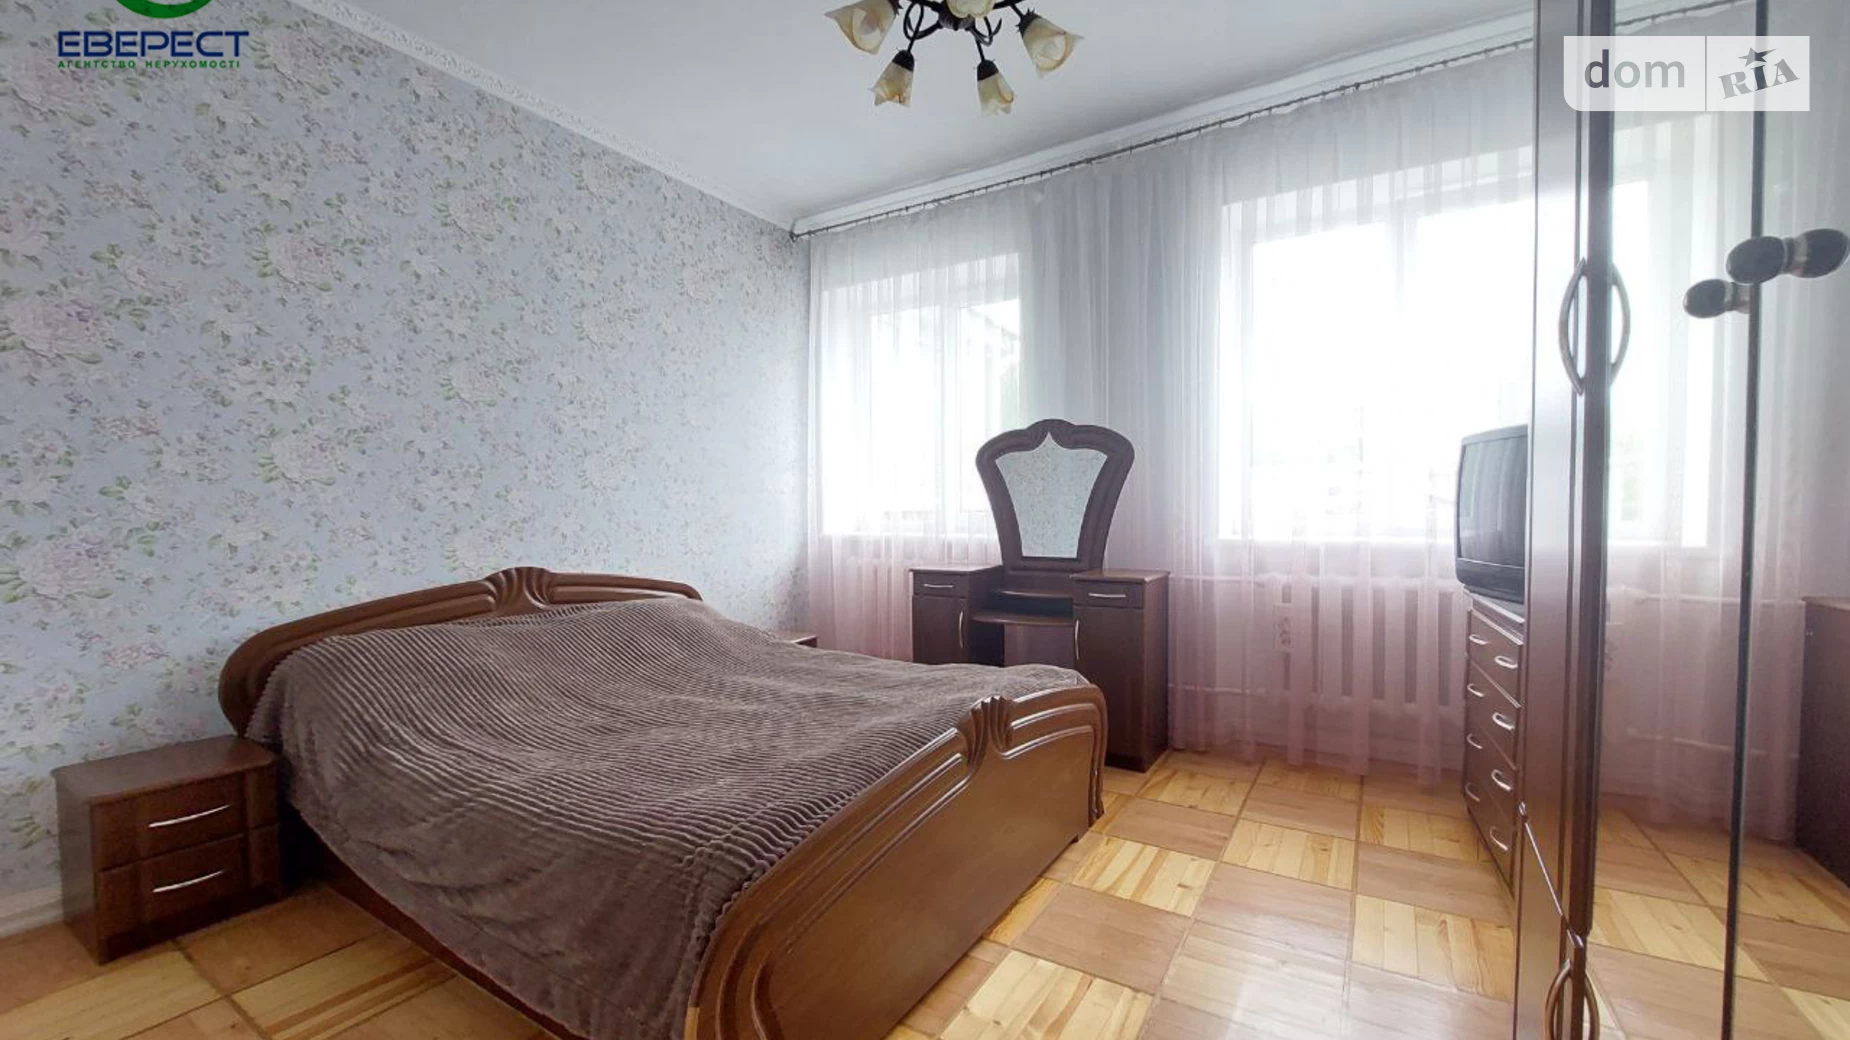 3-кімнатна квартира 73 кв. м у Луцьку, вул. Конякіна